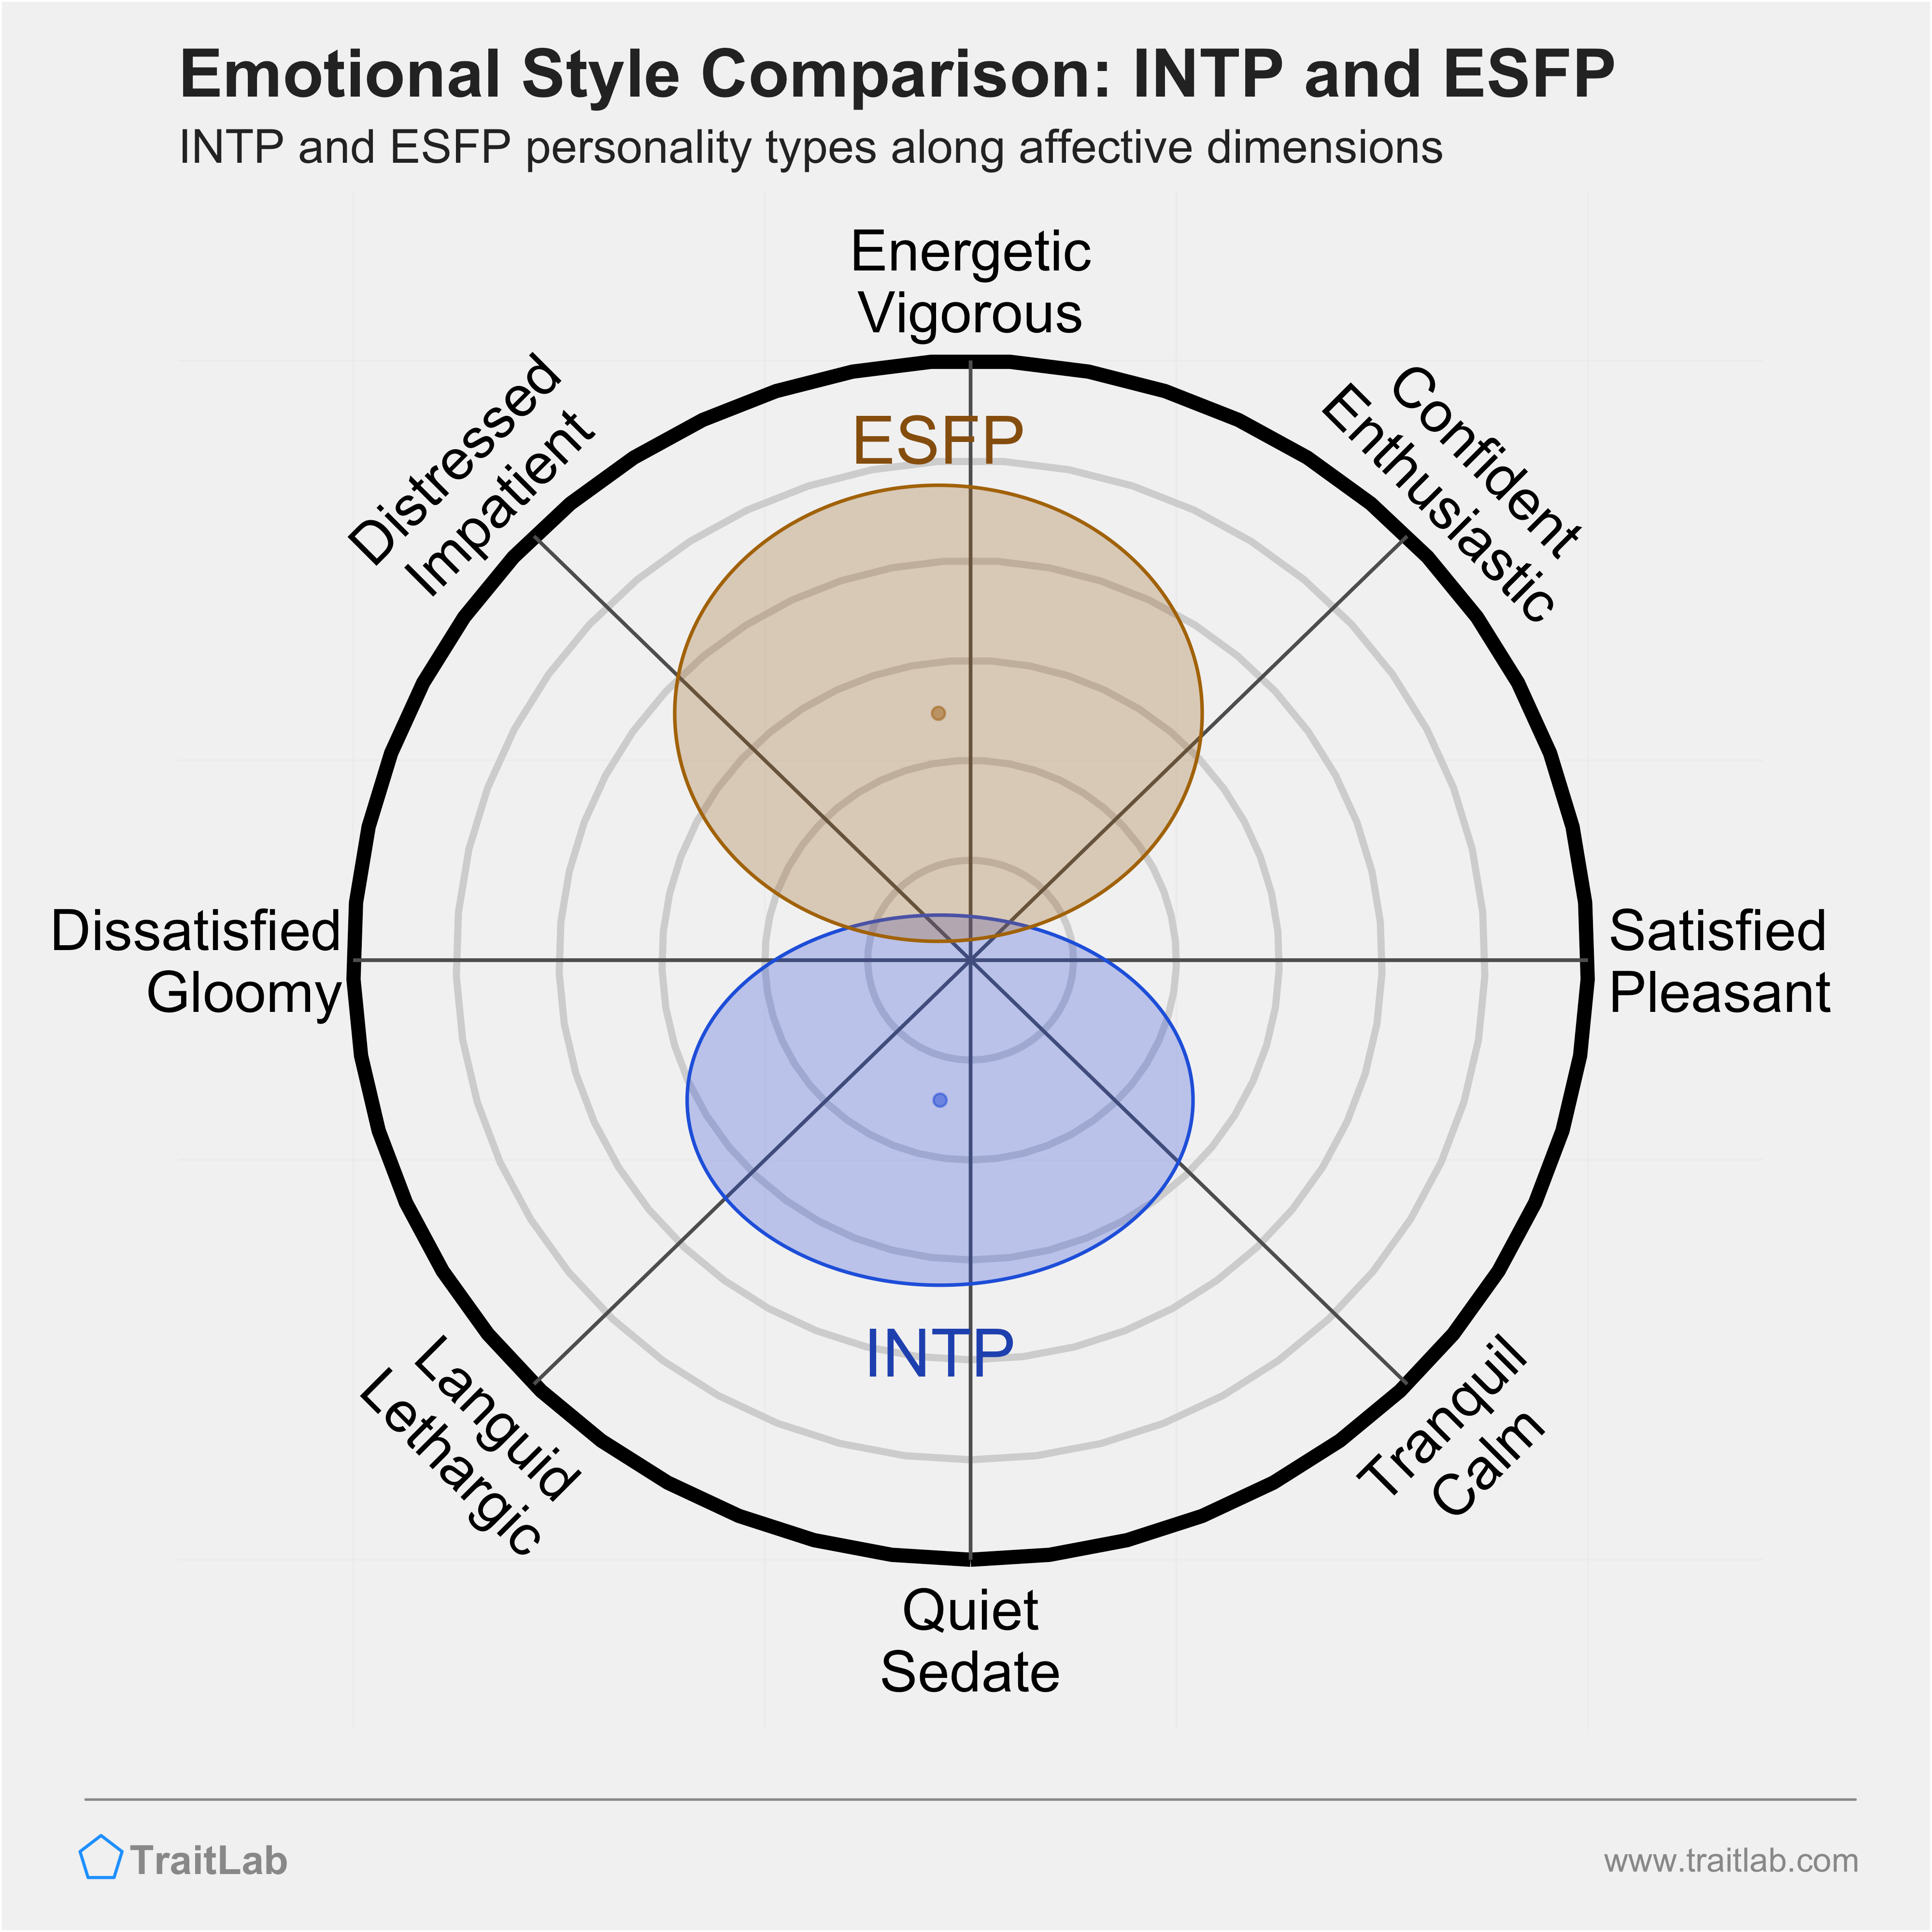 INTP and ESFP comparison across emotional (affective) dimensions